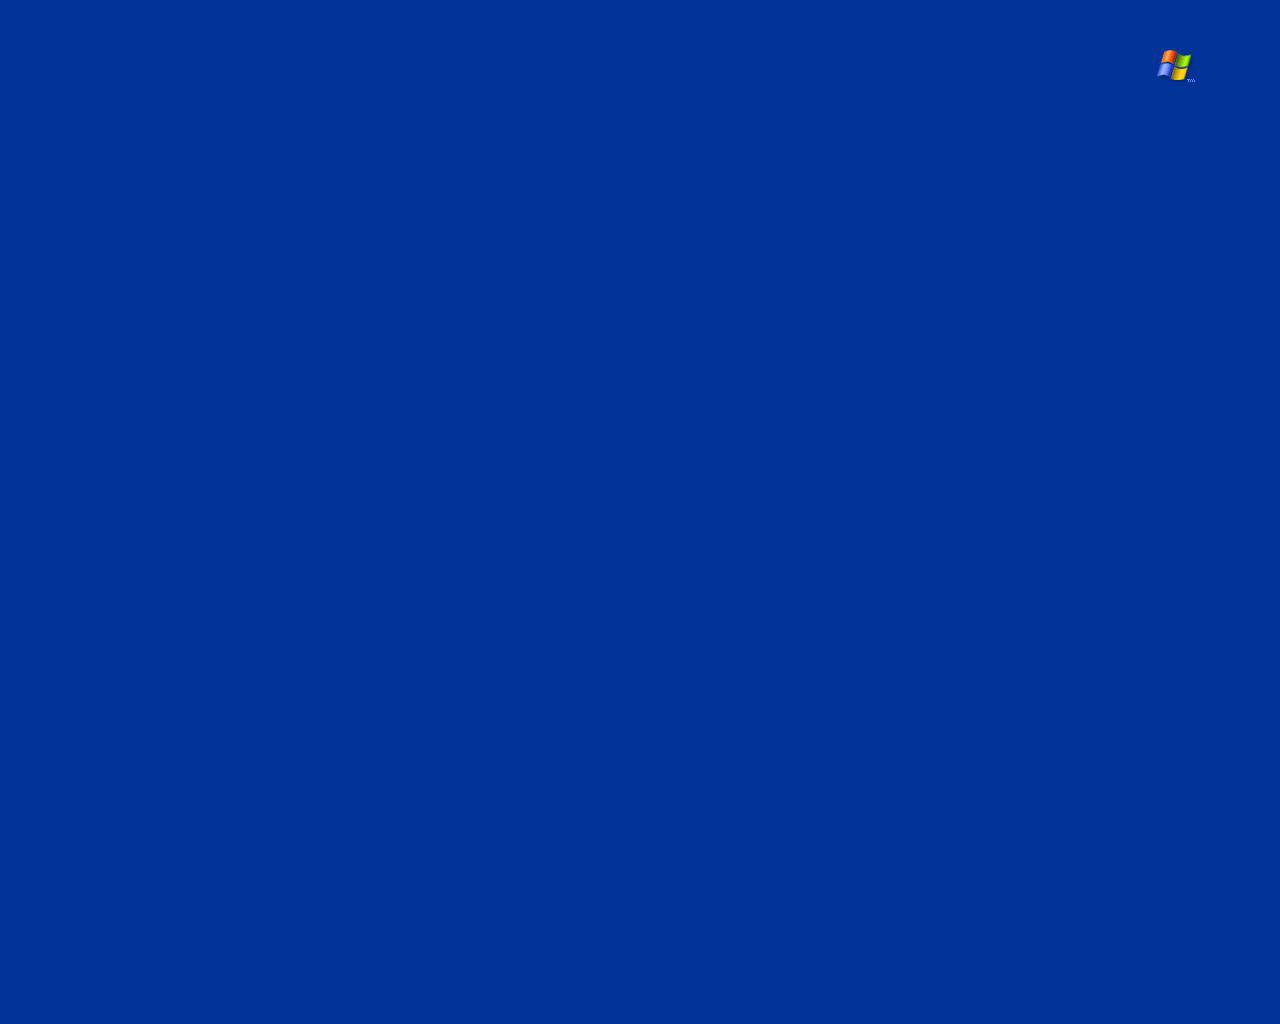 Windows Xp Dark Blue Wallpaper By P0land